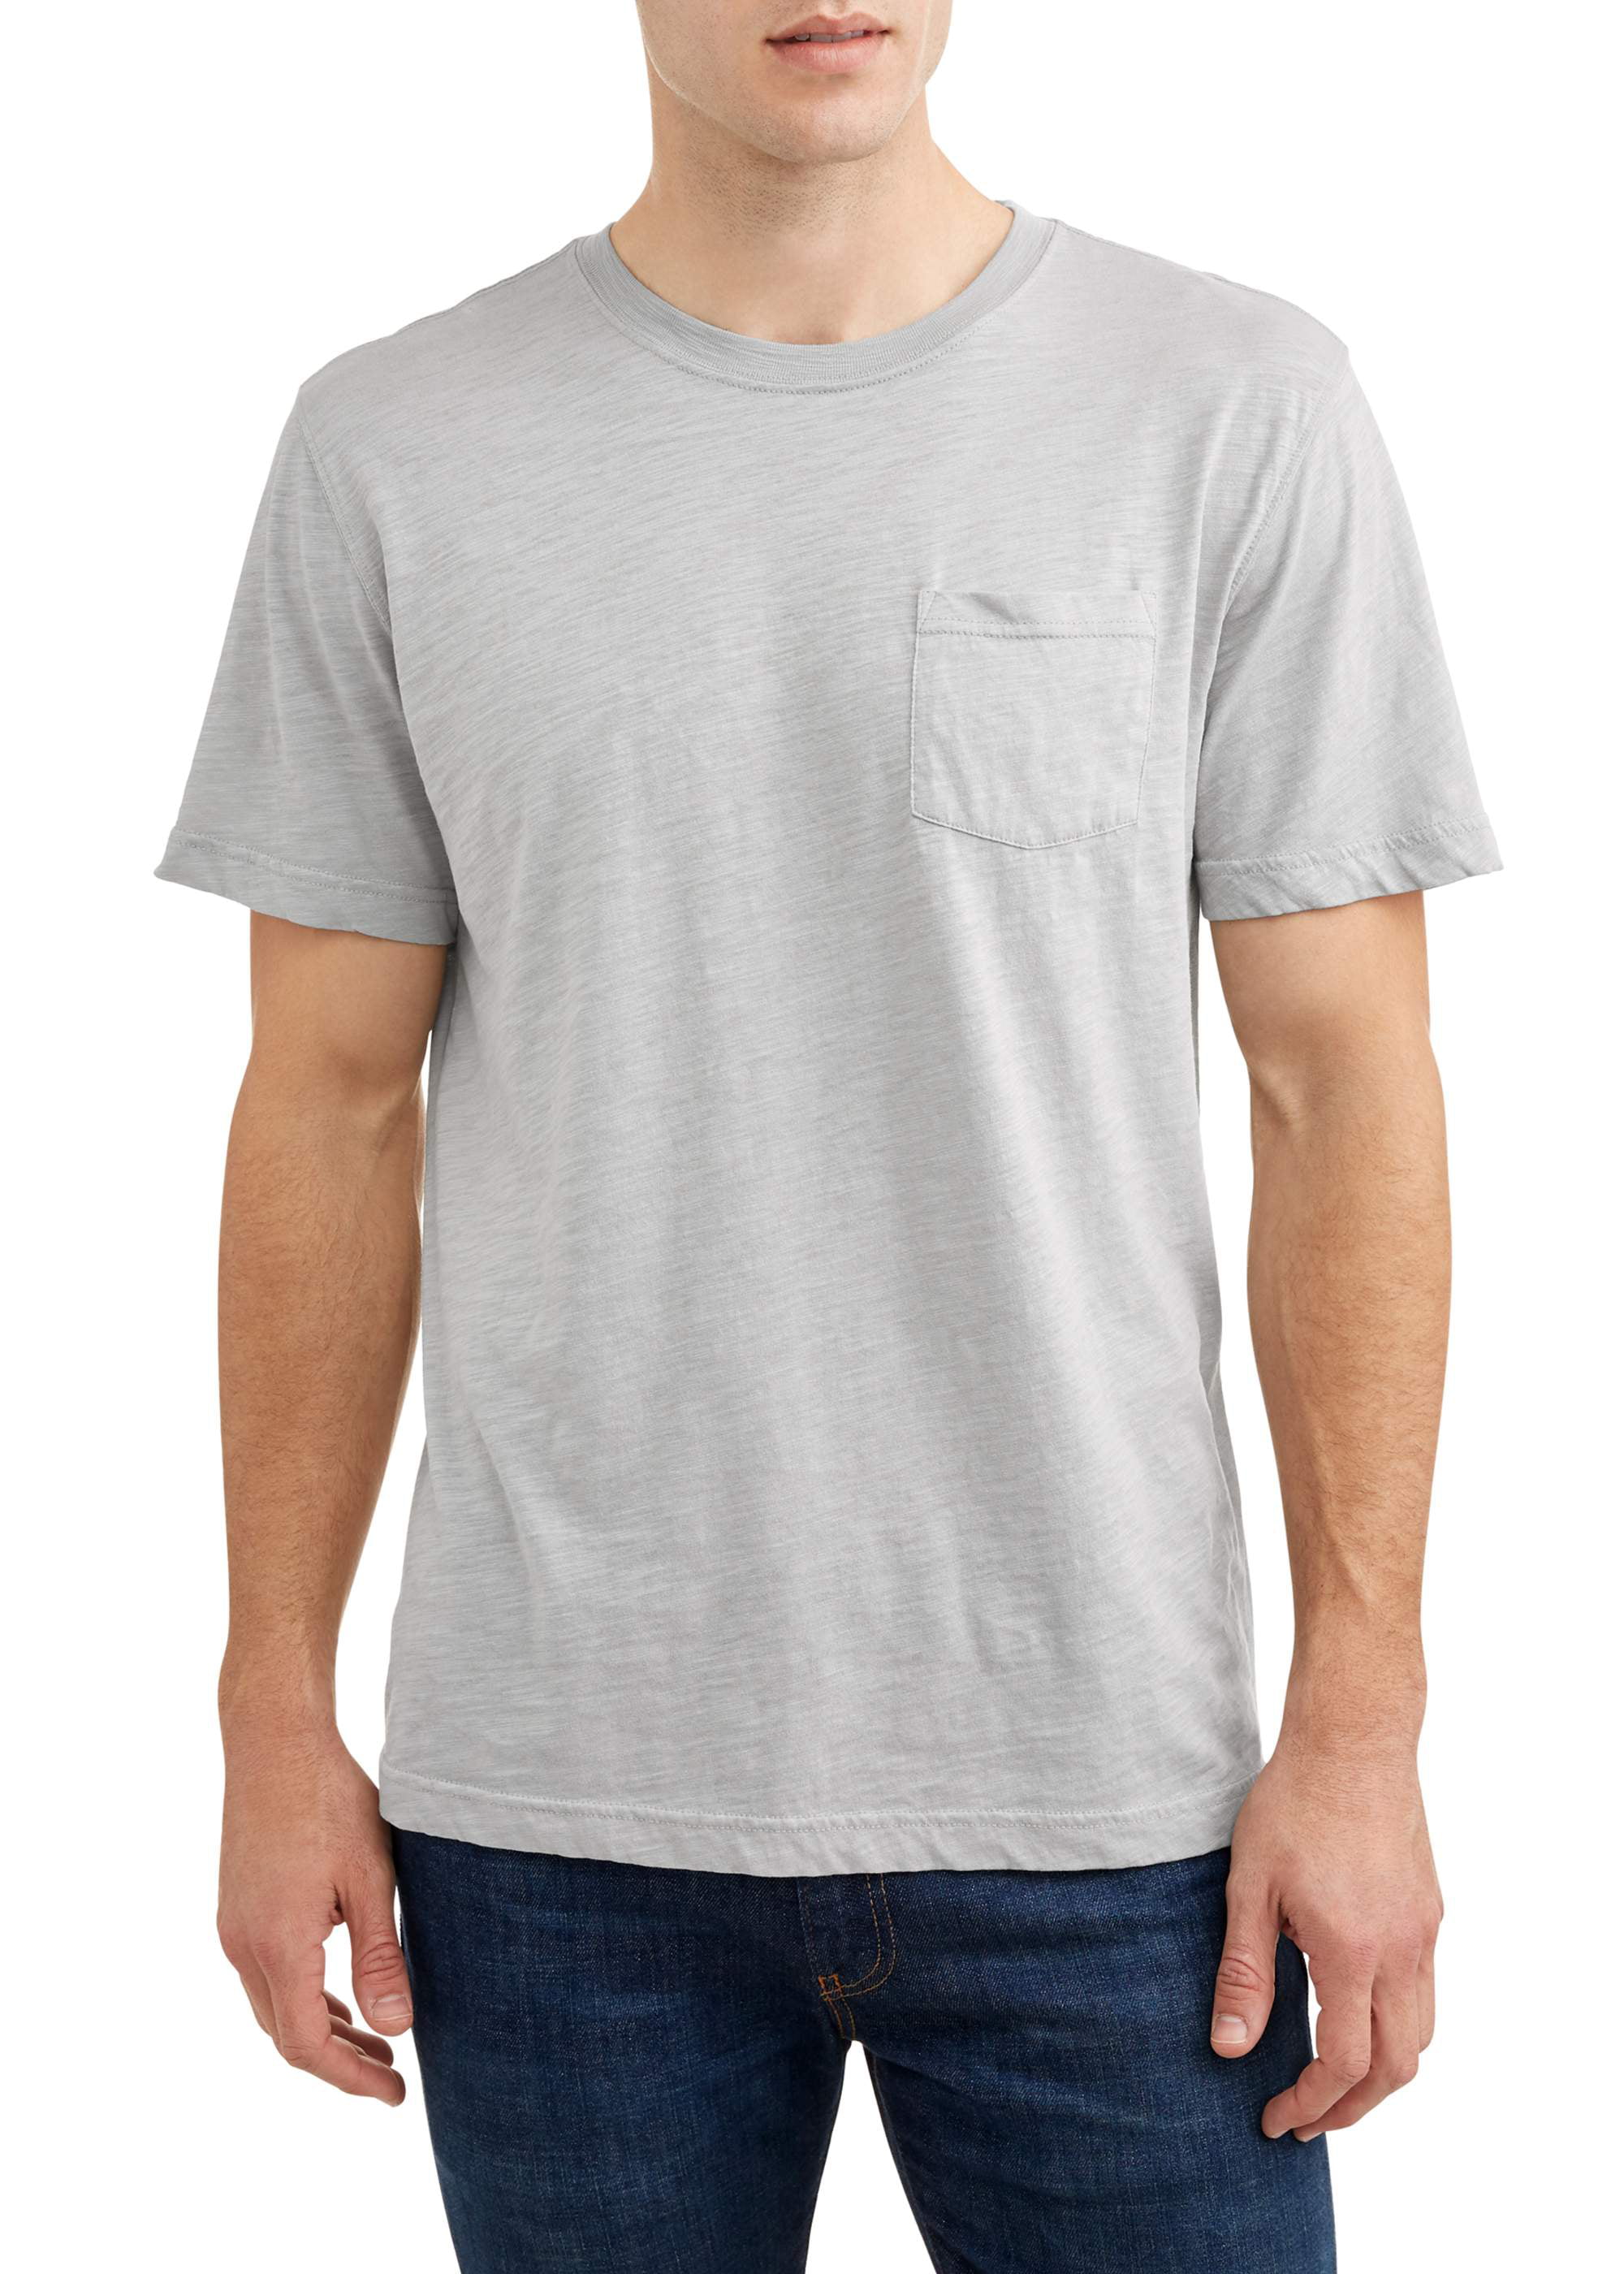 George Men's Washed Solid T-Shirt - Walmart.com